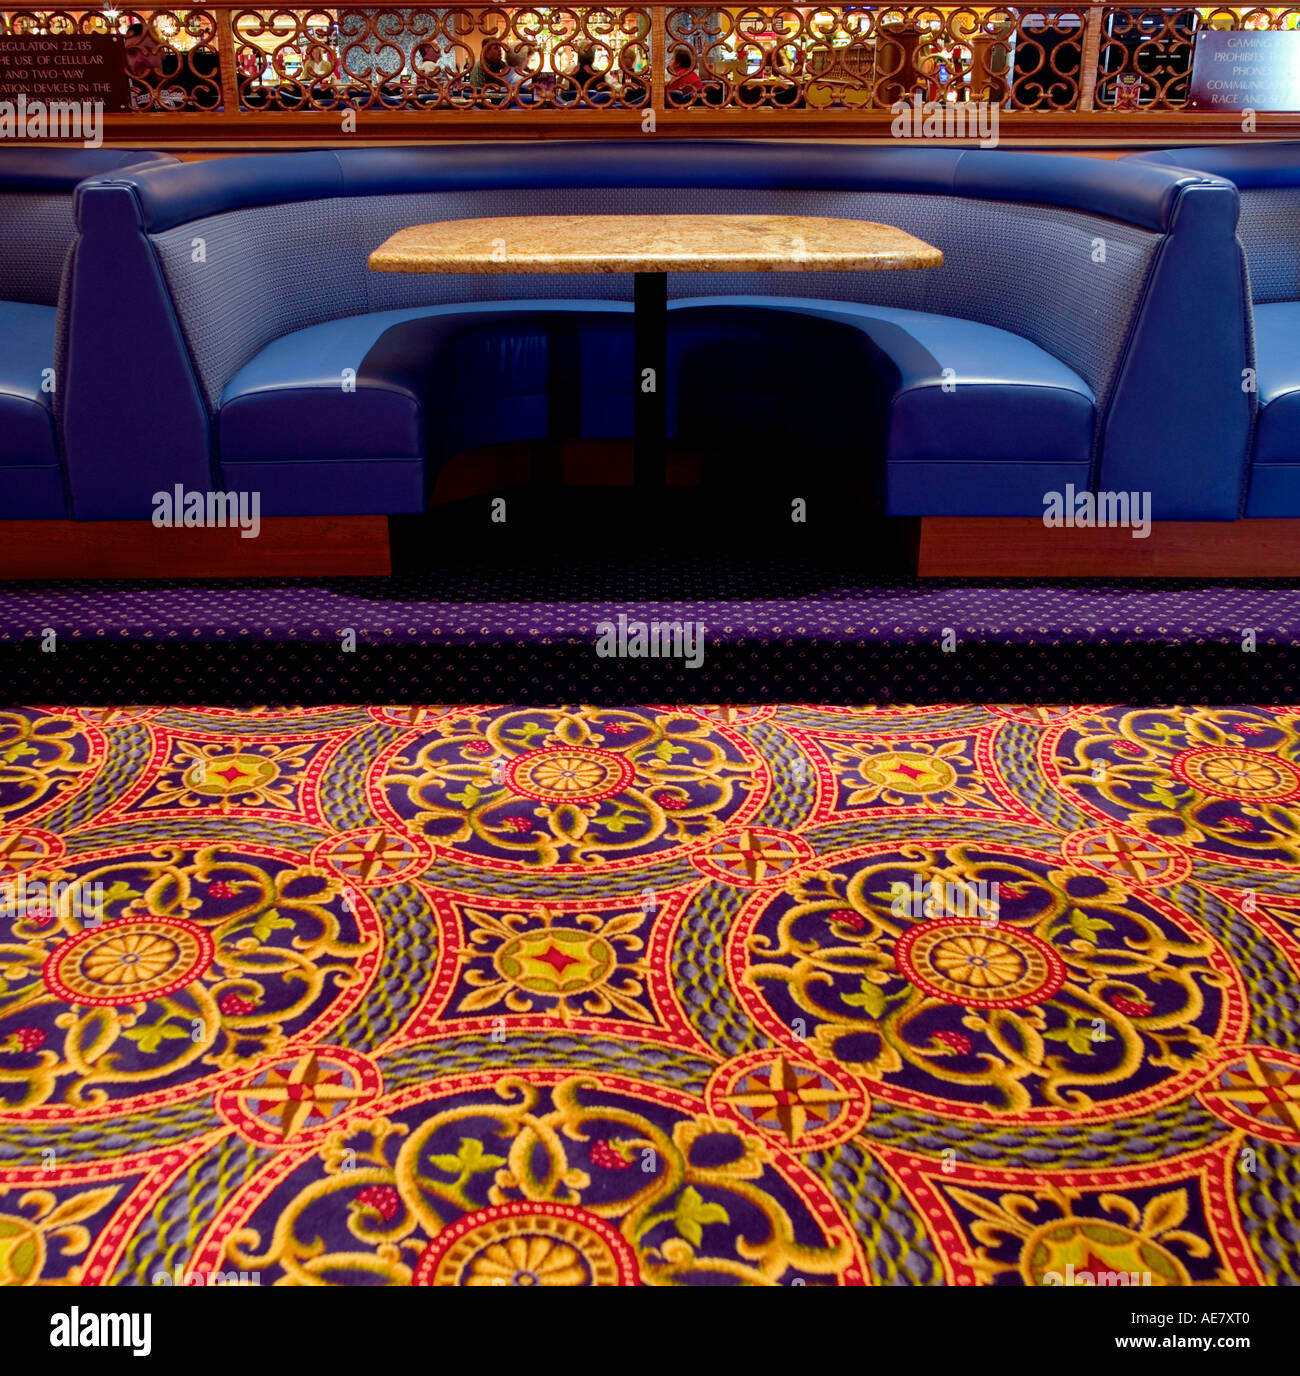 Las Vegas Casino Interieur, blaue Sitzbank mit Sitzgelegenheiten  gemusterten Teppich Stockfotografie - Alamy